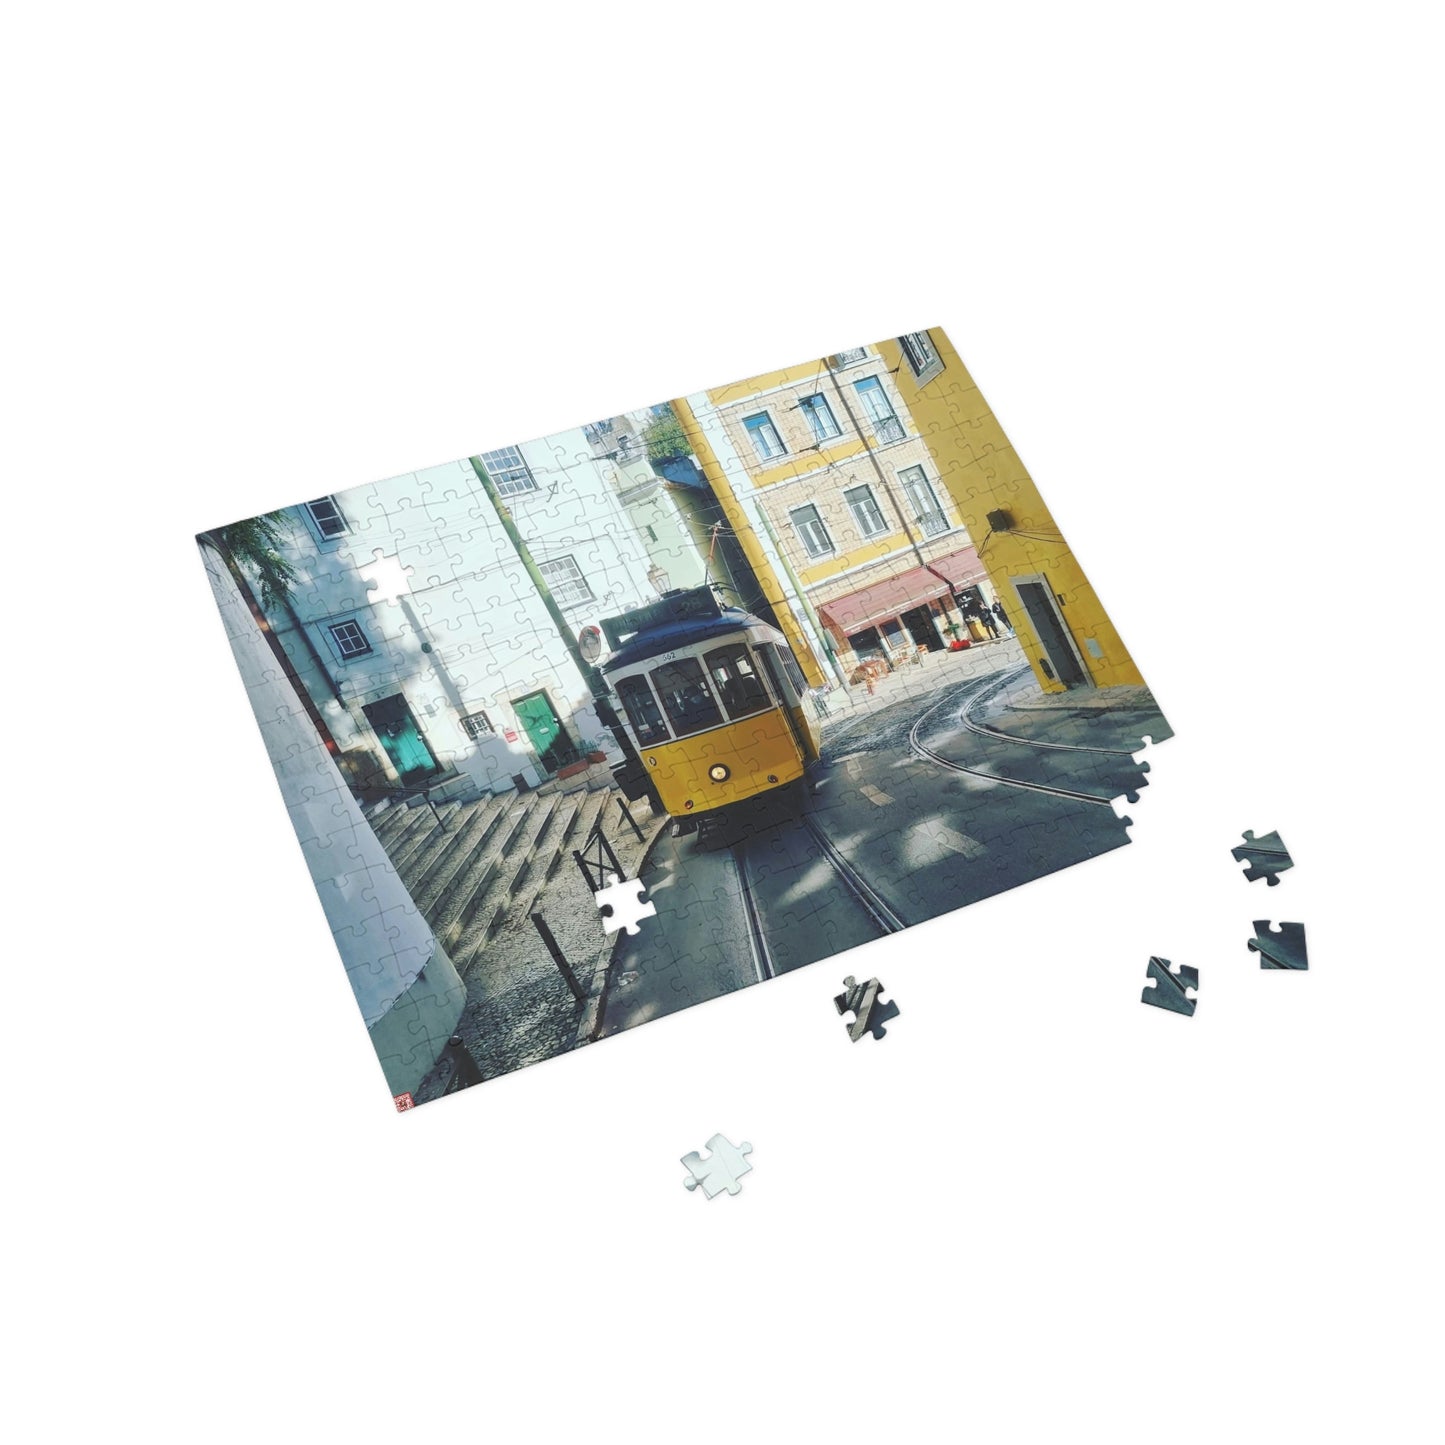 Remodelado Tram | Portugal | Puzzle (96, 252, 500, 1000-Piece)